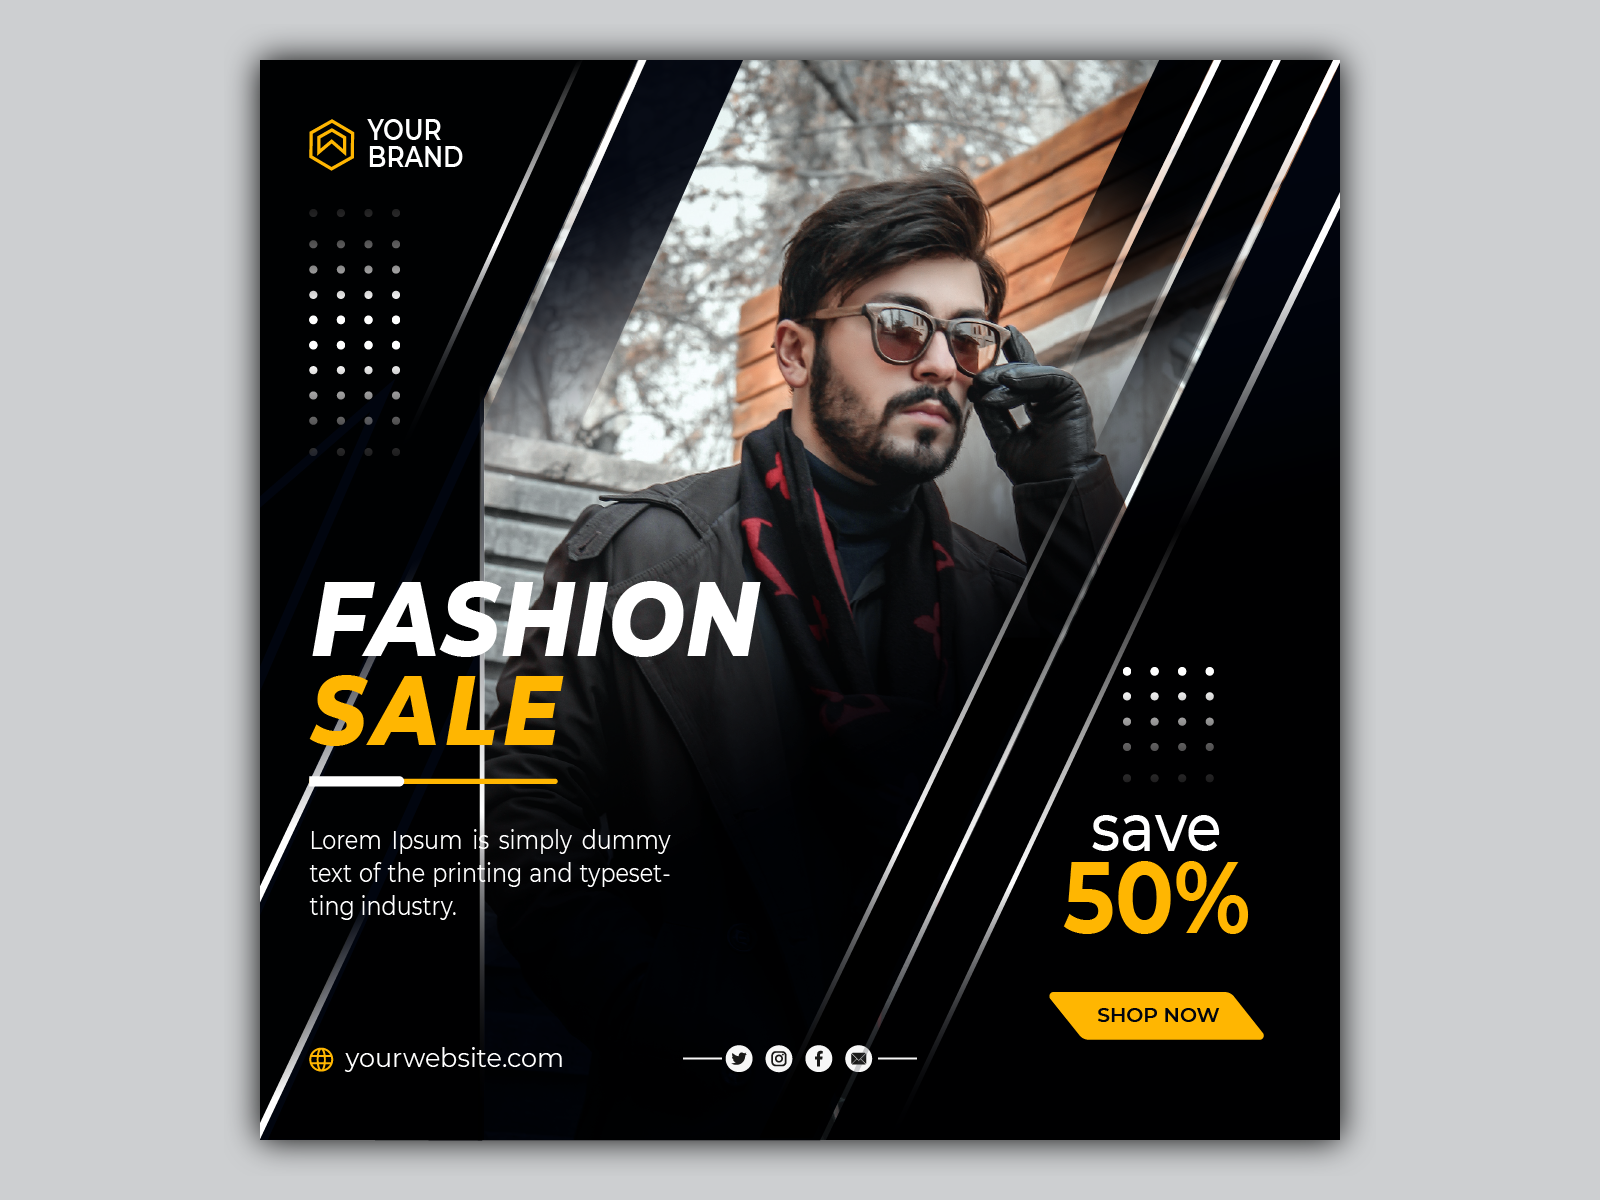 Fashion sale promotion banner instagram post by Md Rakib Islam on Dribbble